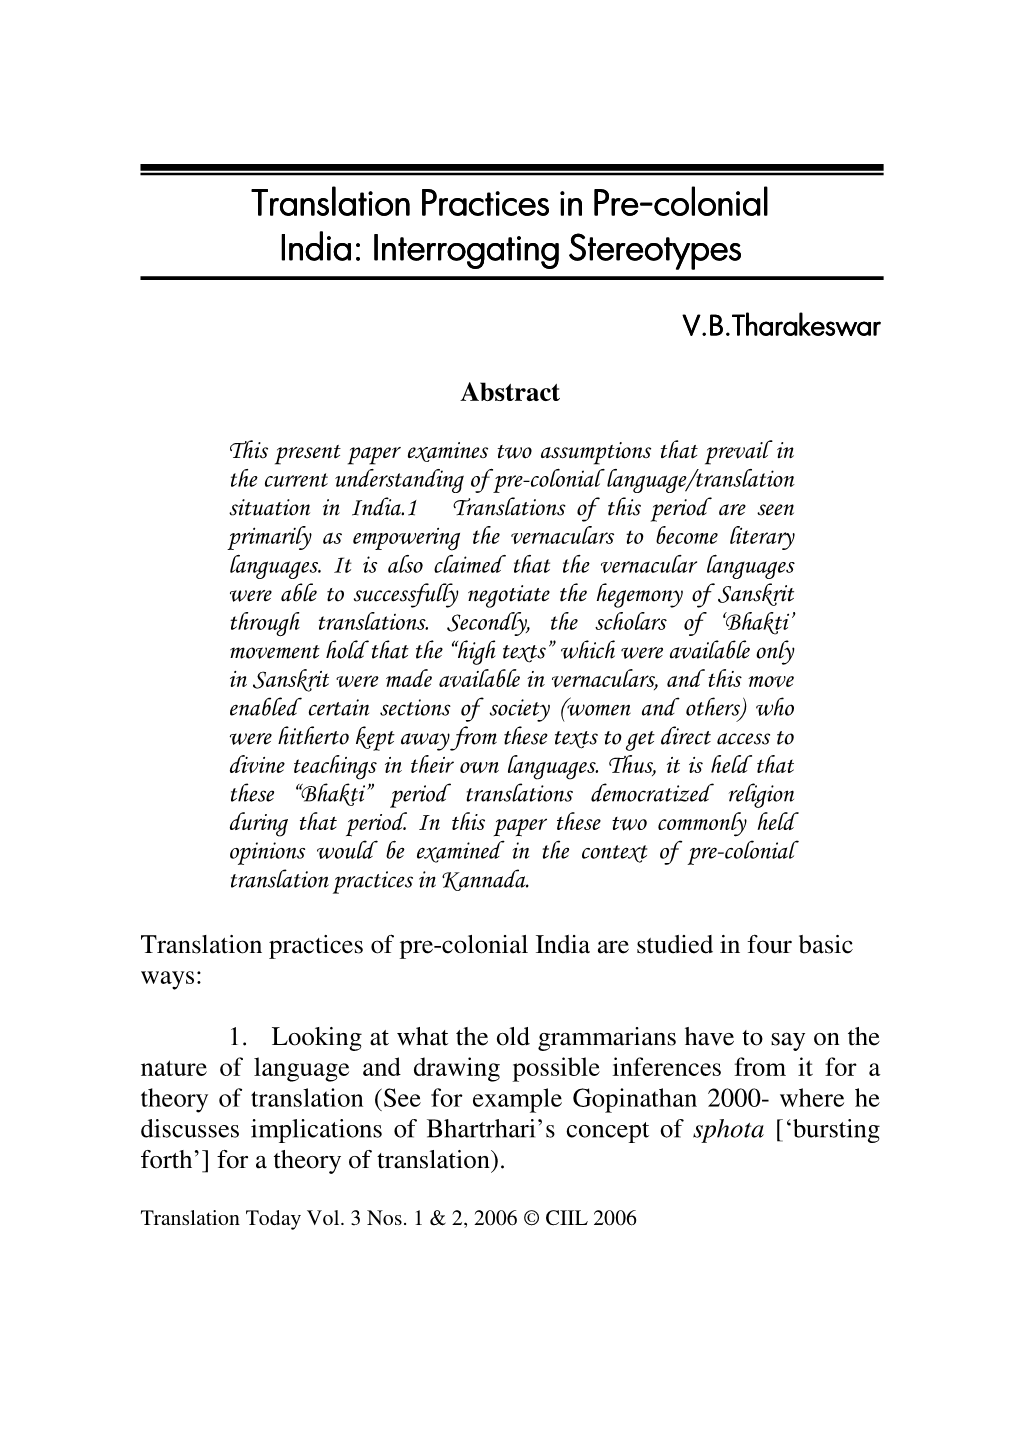 Interrogating India